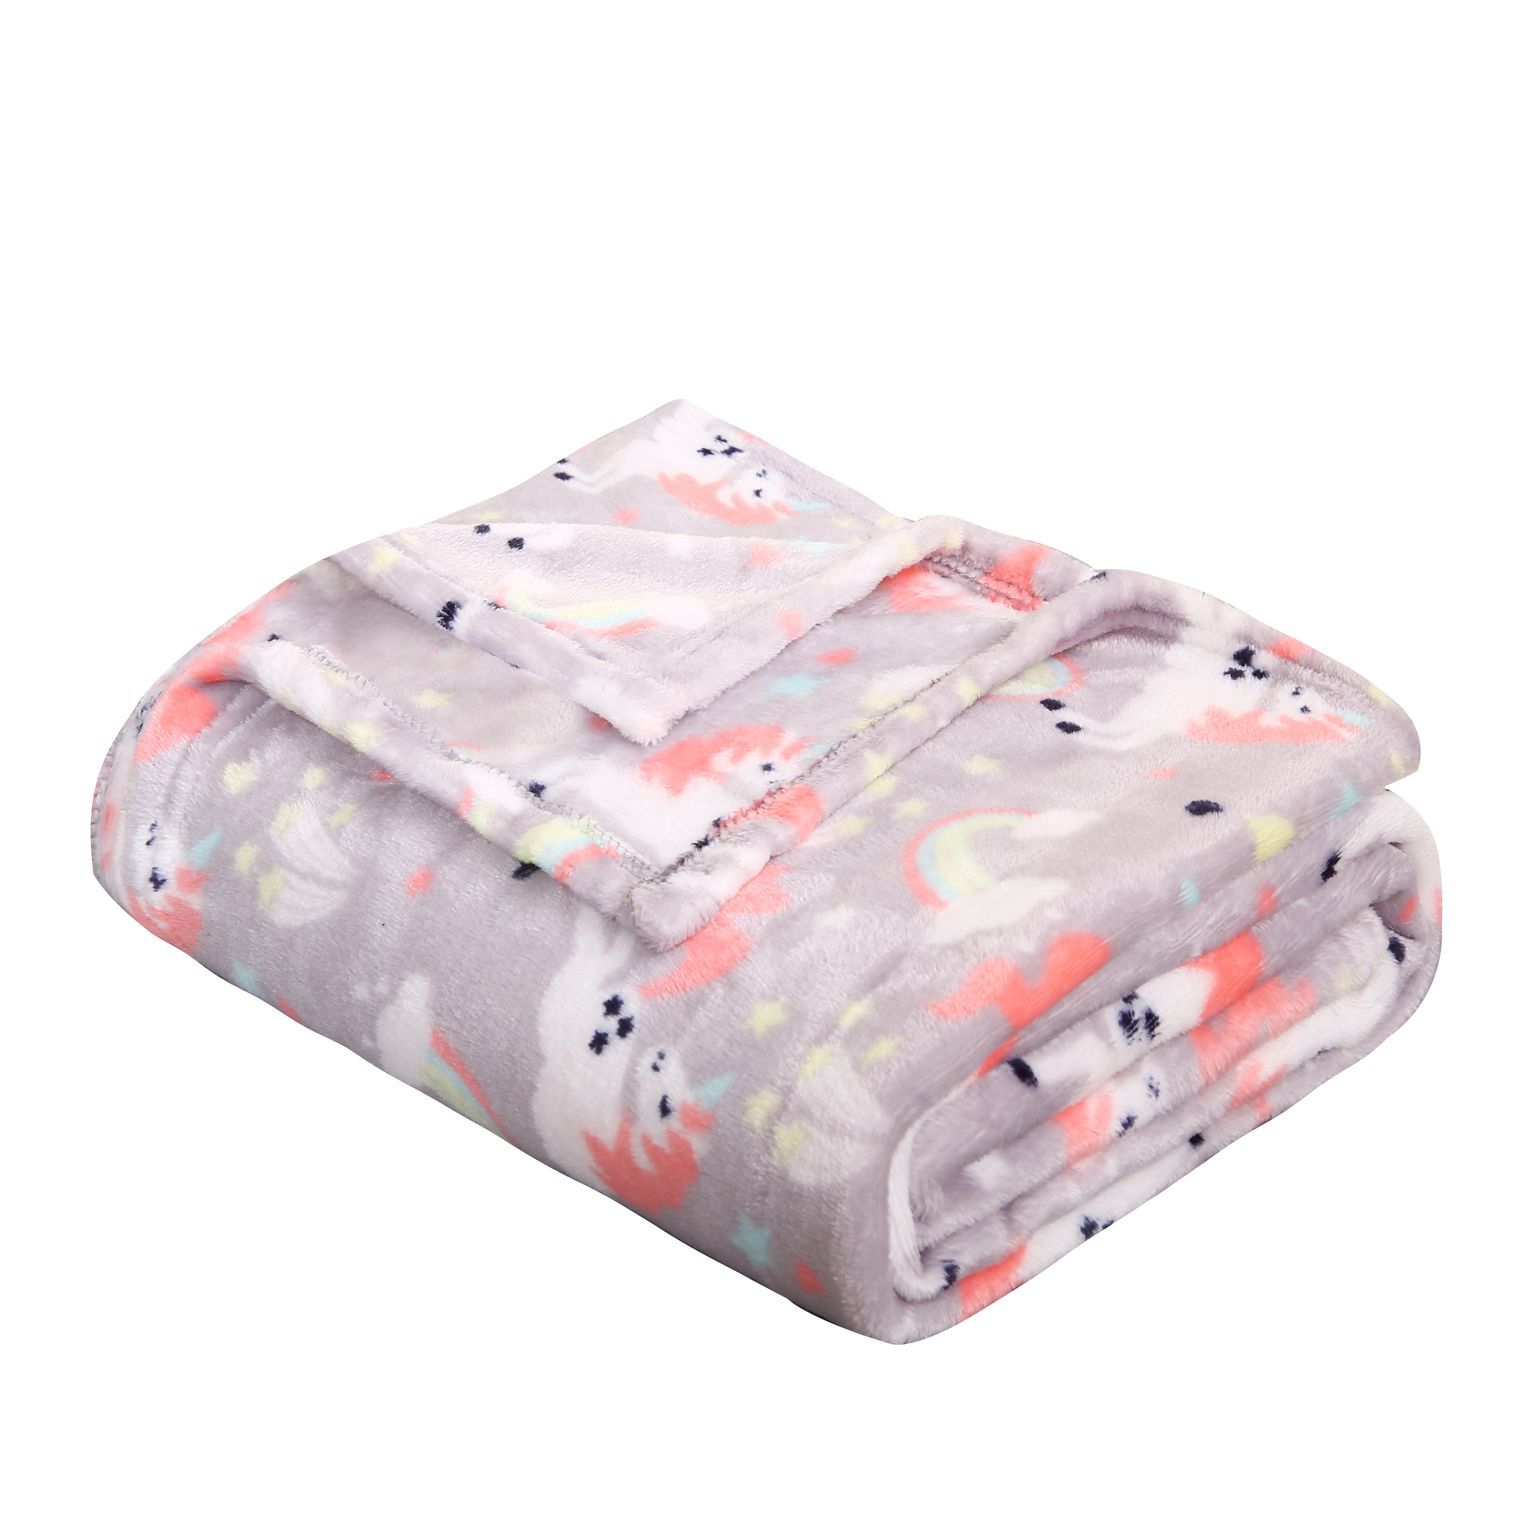 Super Soft Blanket - Assorted Styles / Unicorn